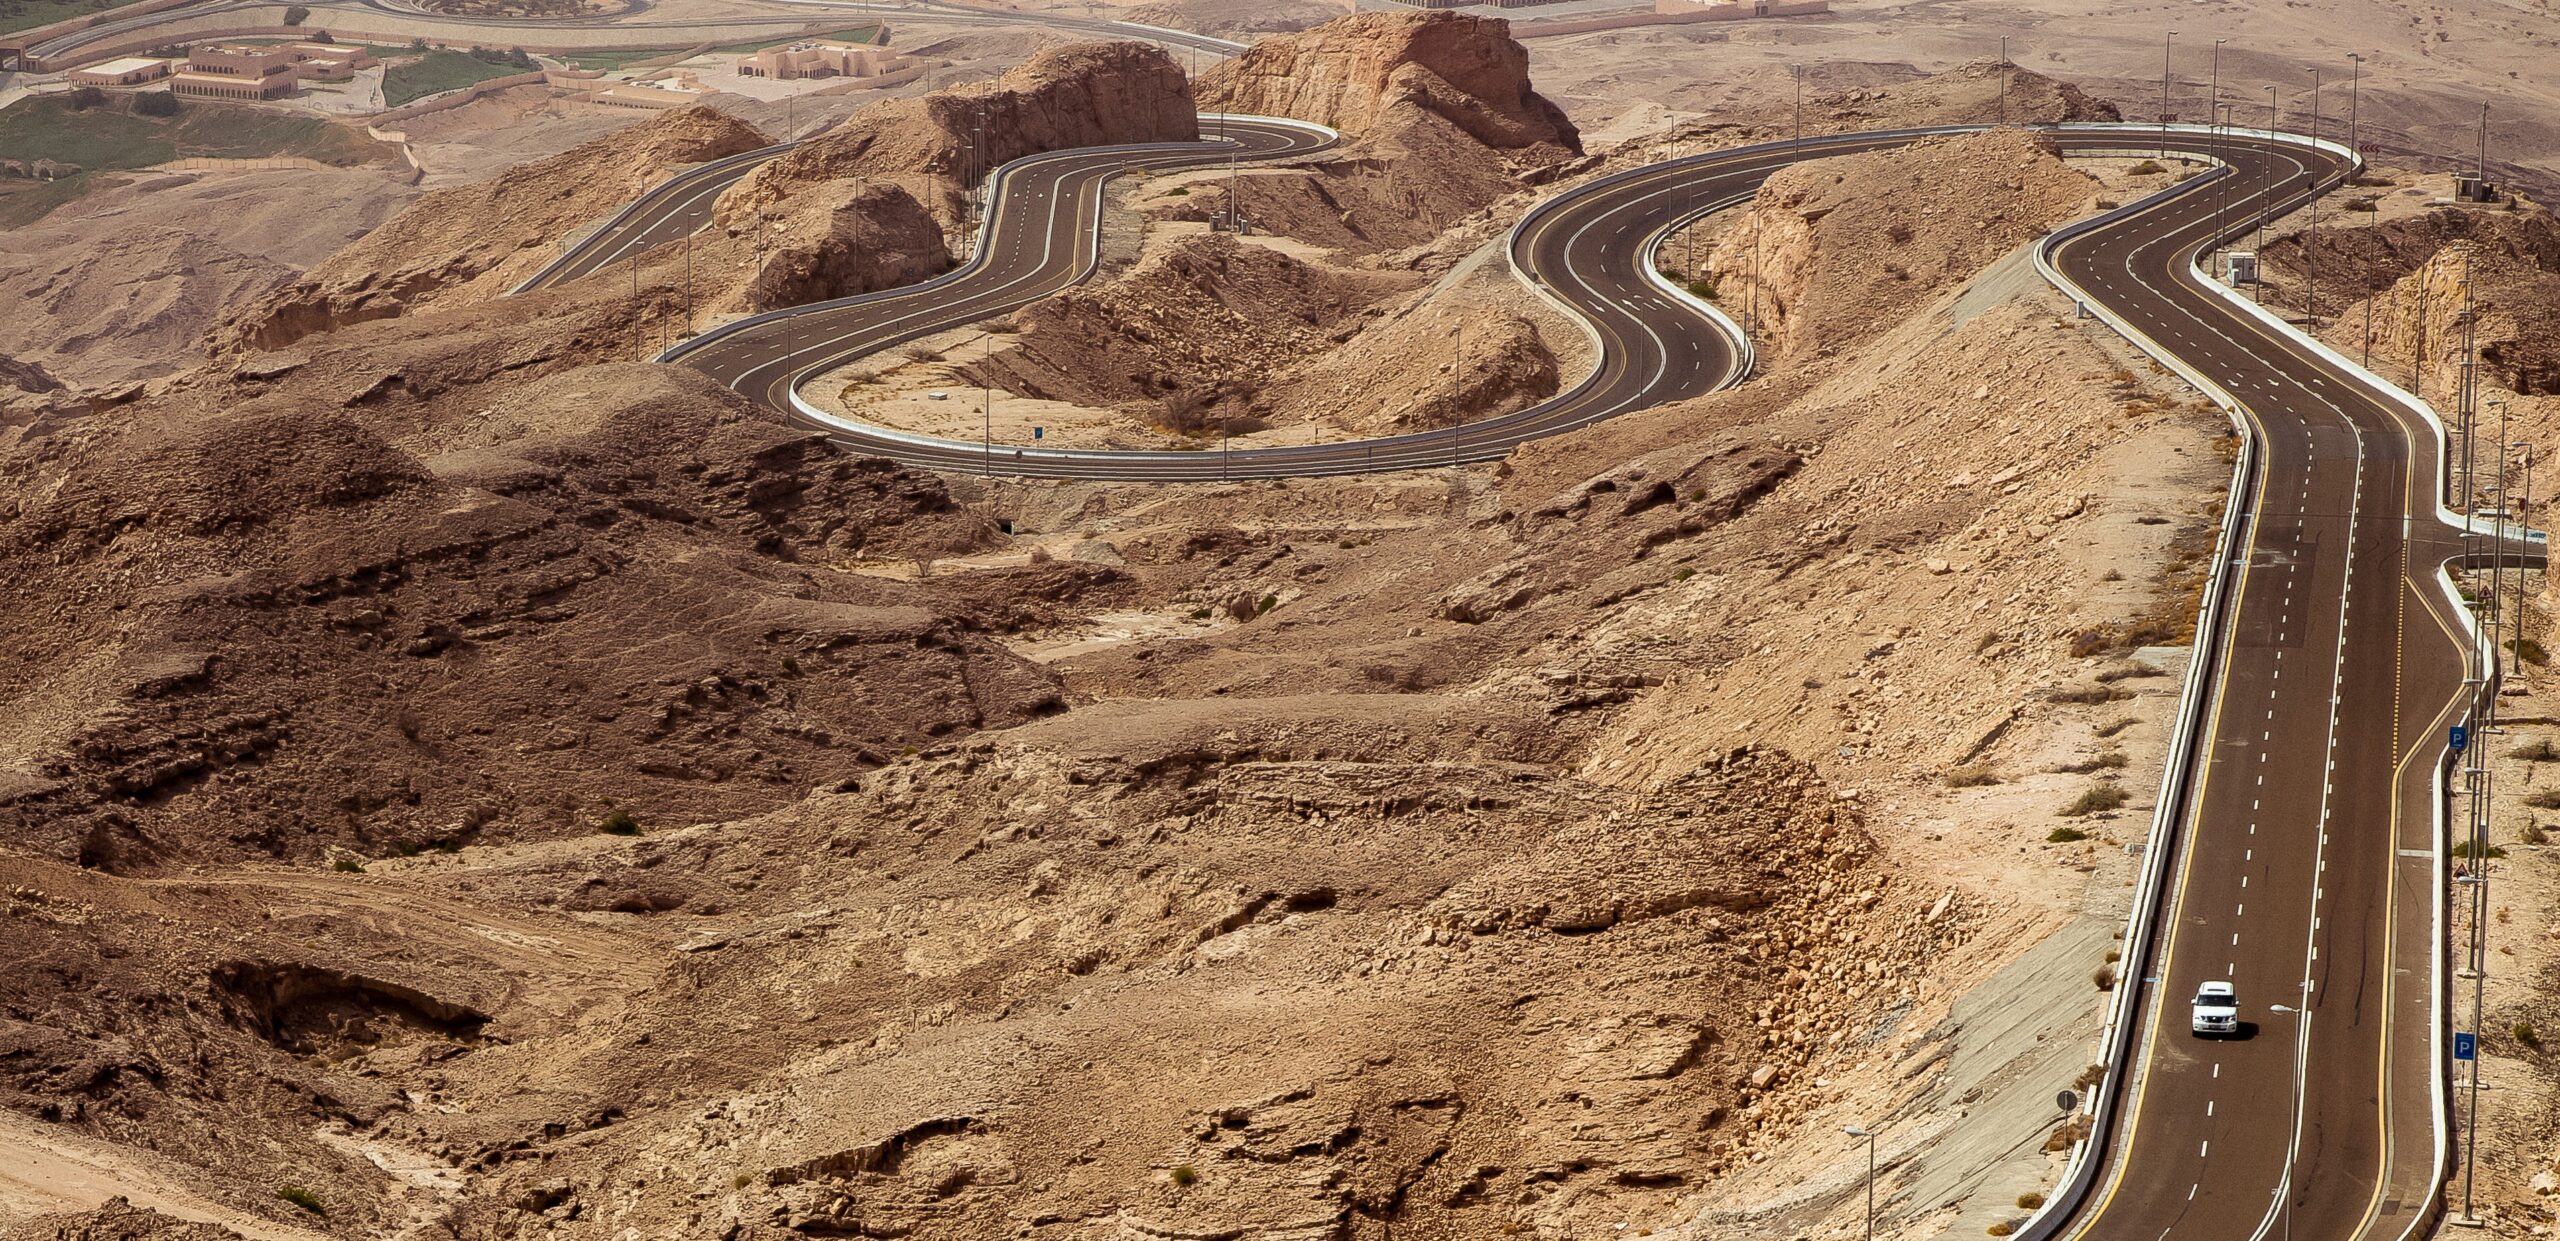 UAE's Jebel Hafeet winding mountain road - Wikimedia|Checklist image - start your DEI journey